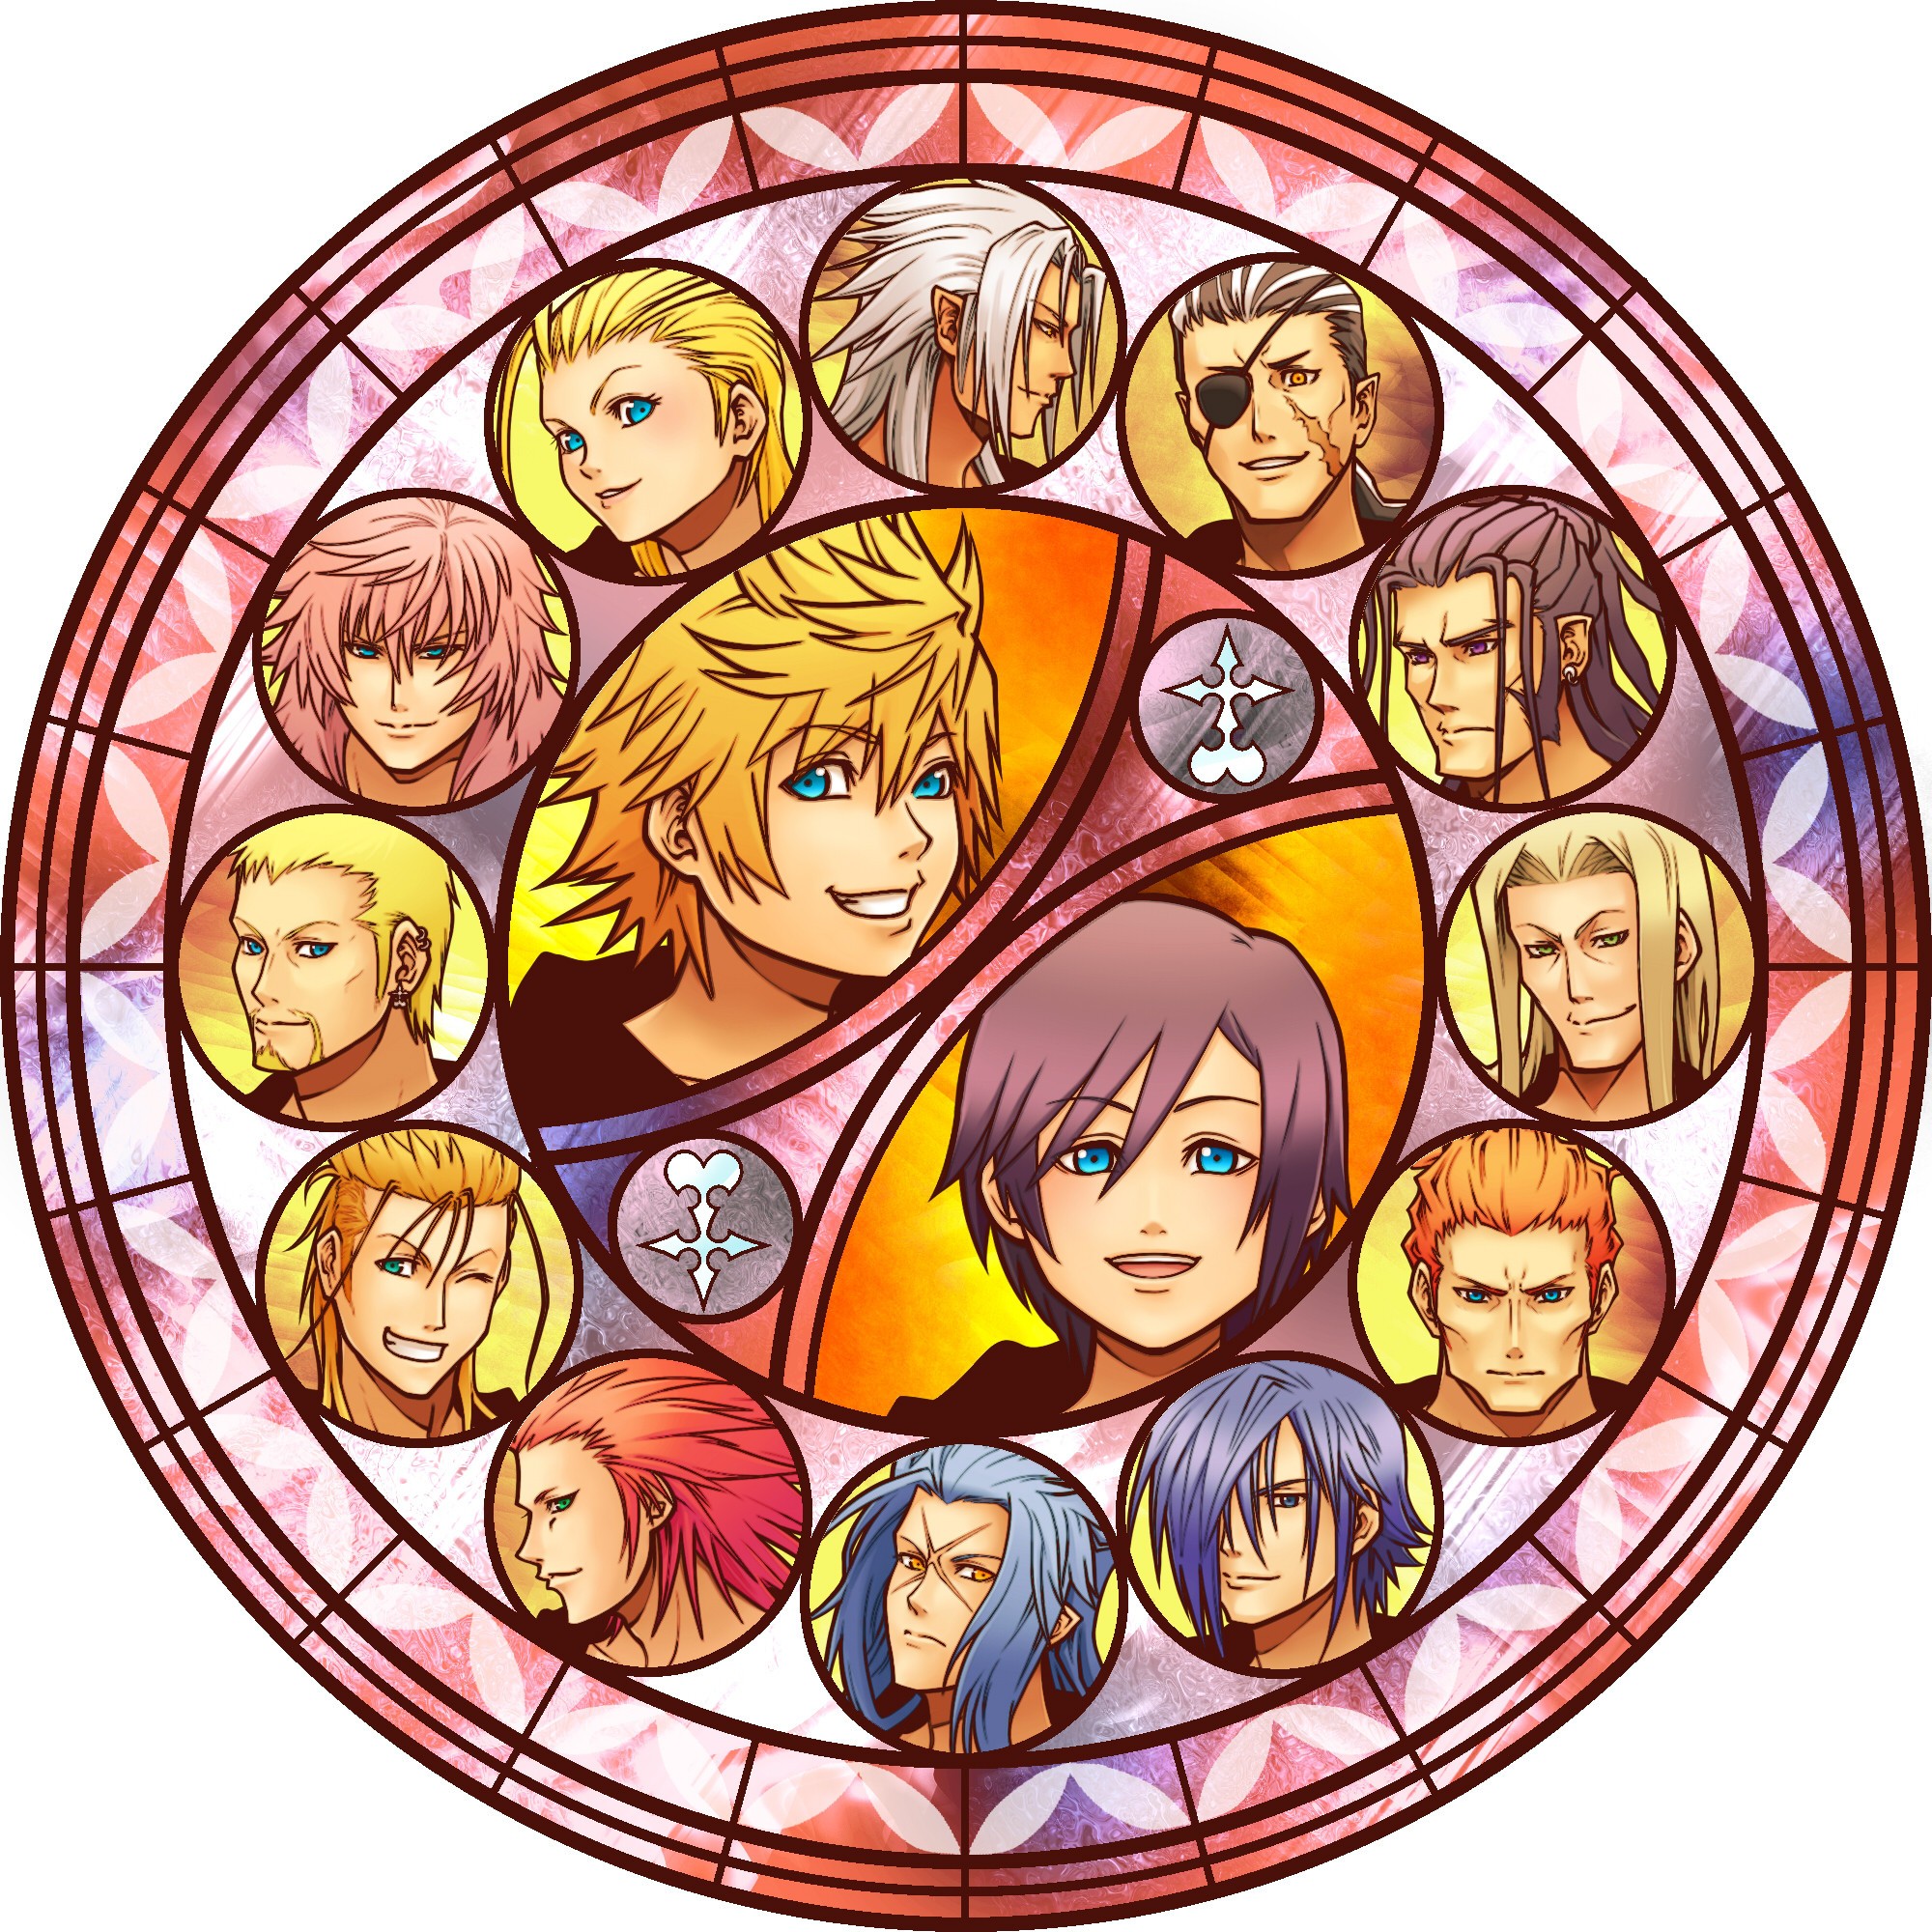 Kingdom Hearts, Final Fantasy XIII, Demyx, Roxas - desktop wallpaper